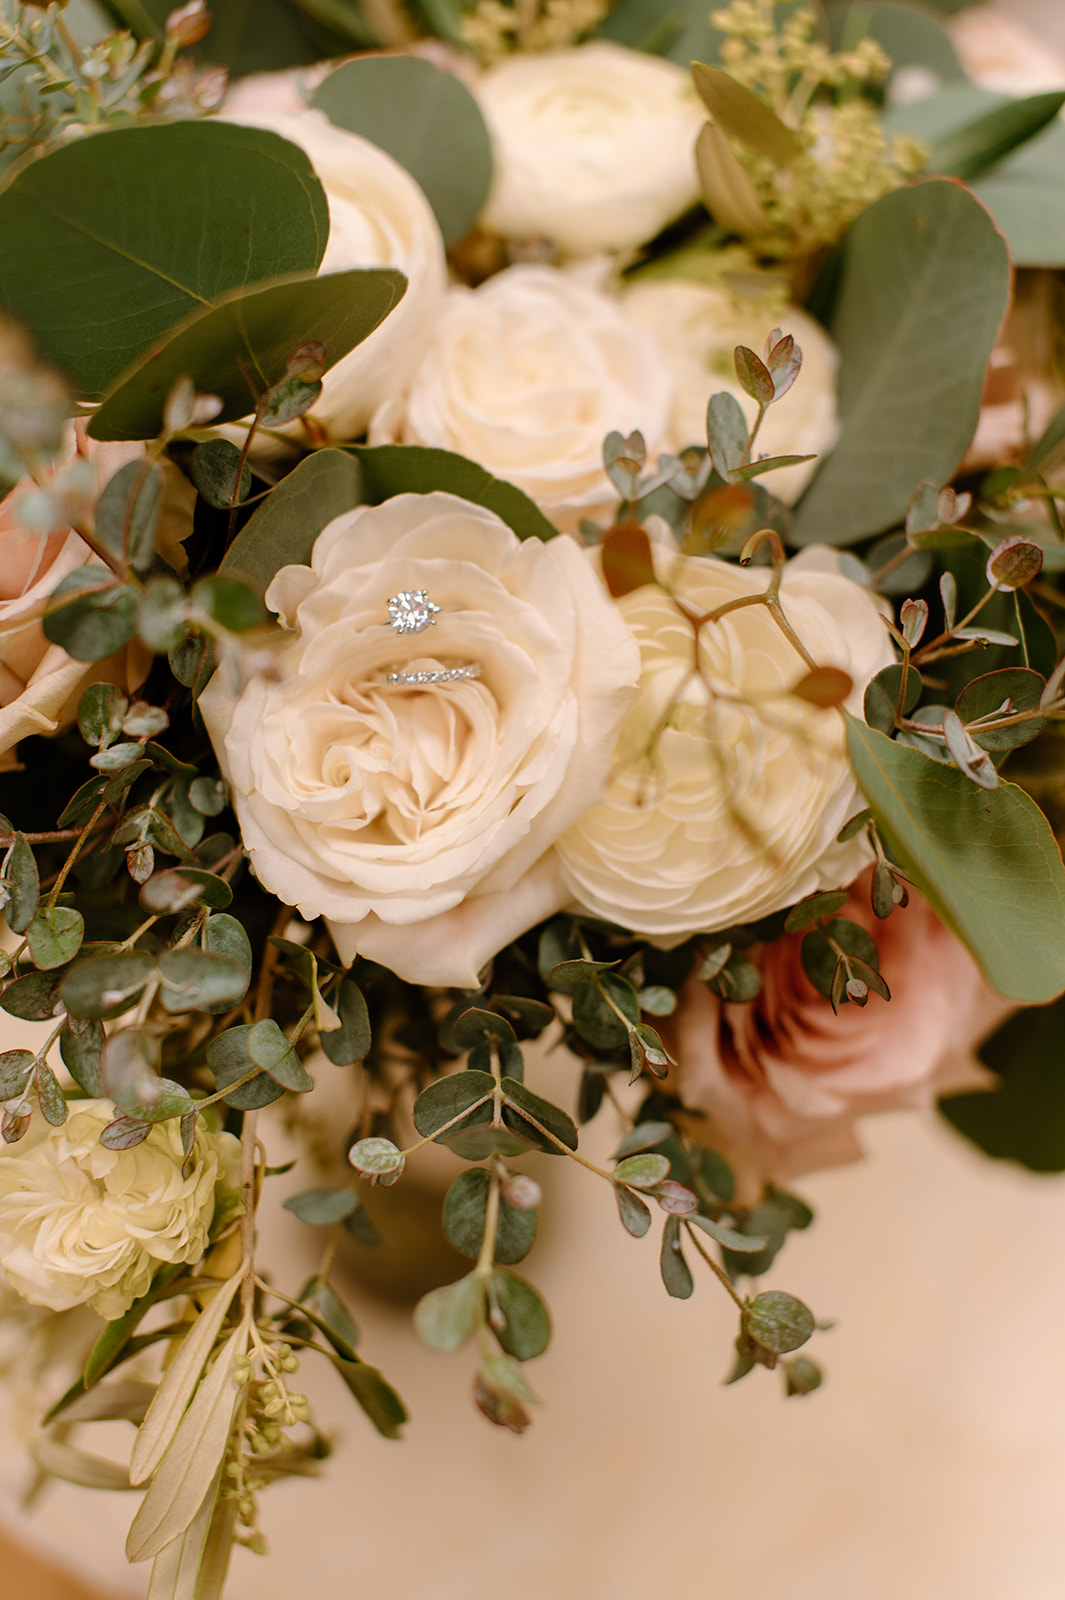 Sydney Jai Photography - Northern California wedding photographer, wedding details, wedding florals, spring wedding flowers